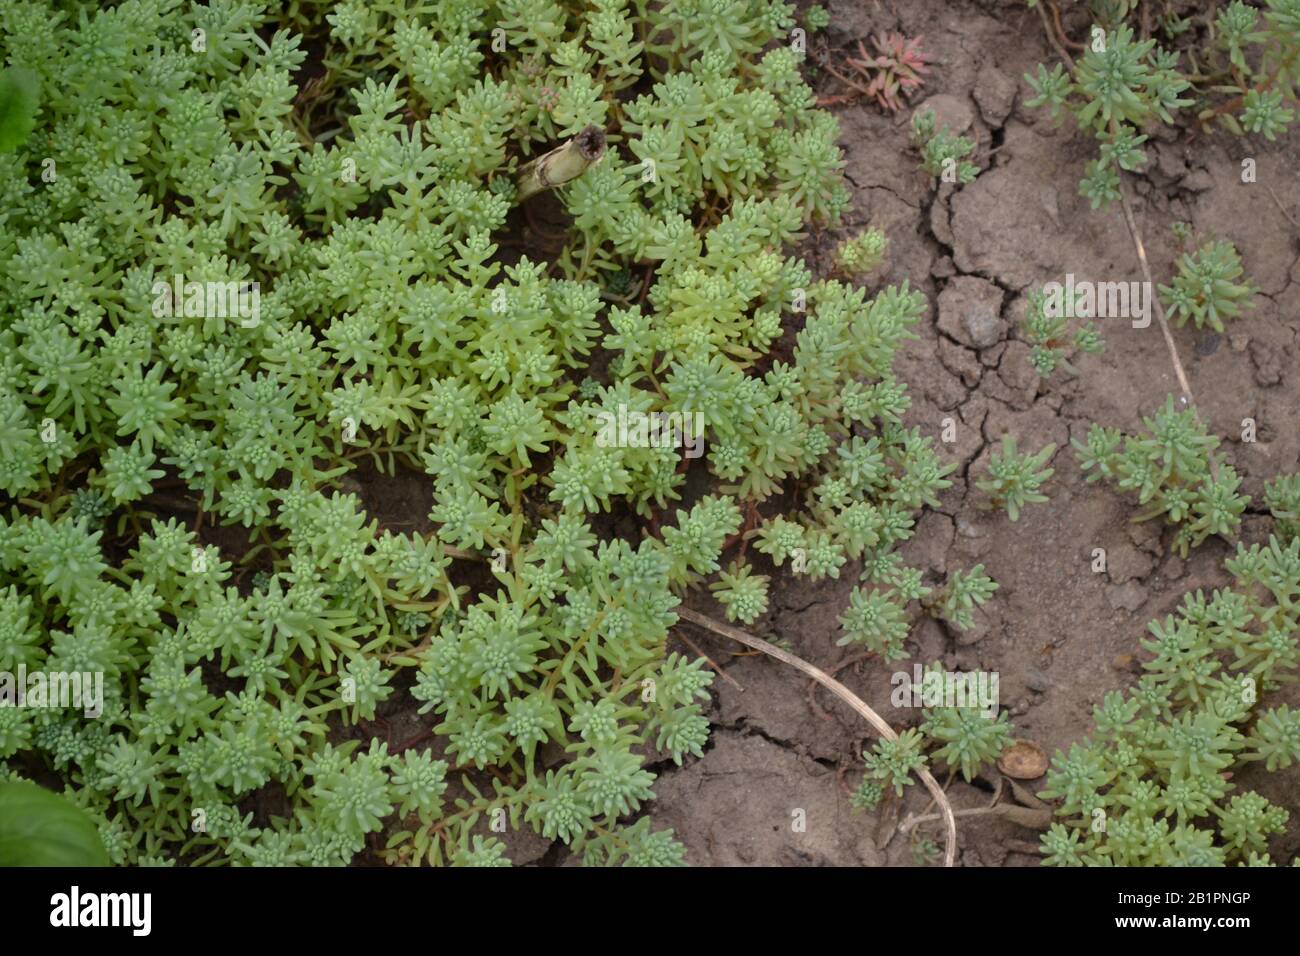 Stonecrop. Hare cabbage. Sedum. Green moss. Decorative grassy carpet. Flower bed. Horizontal Stock Photo